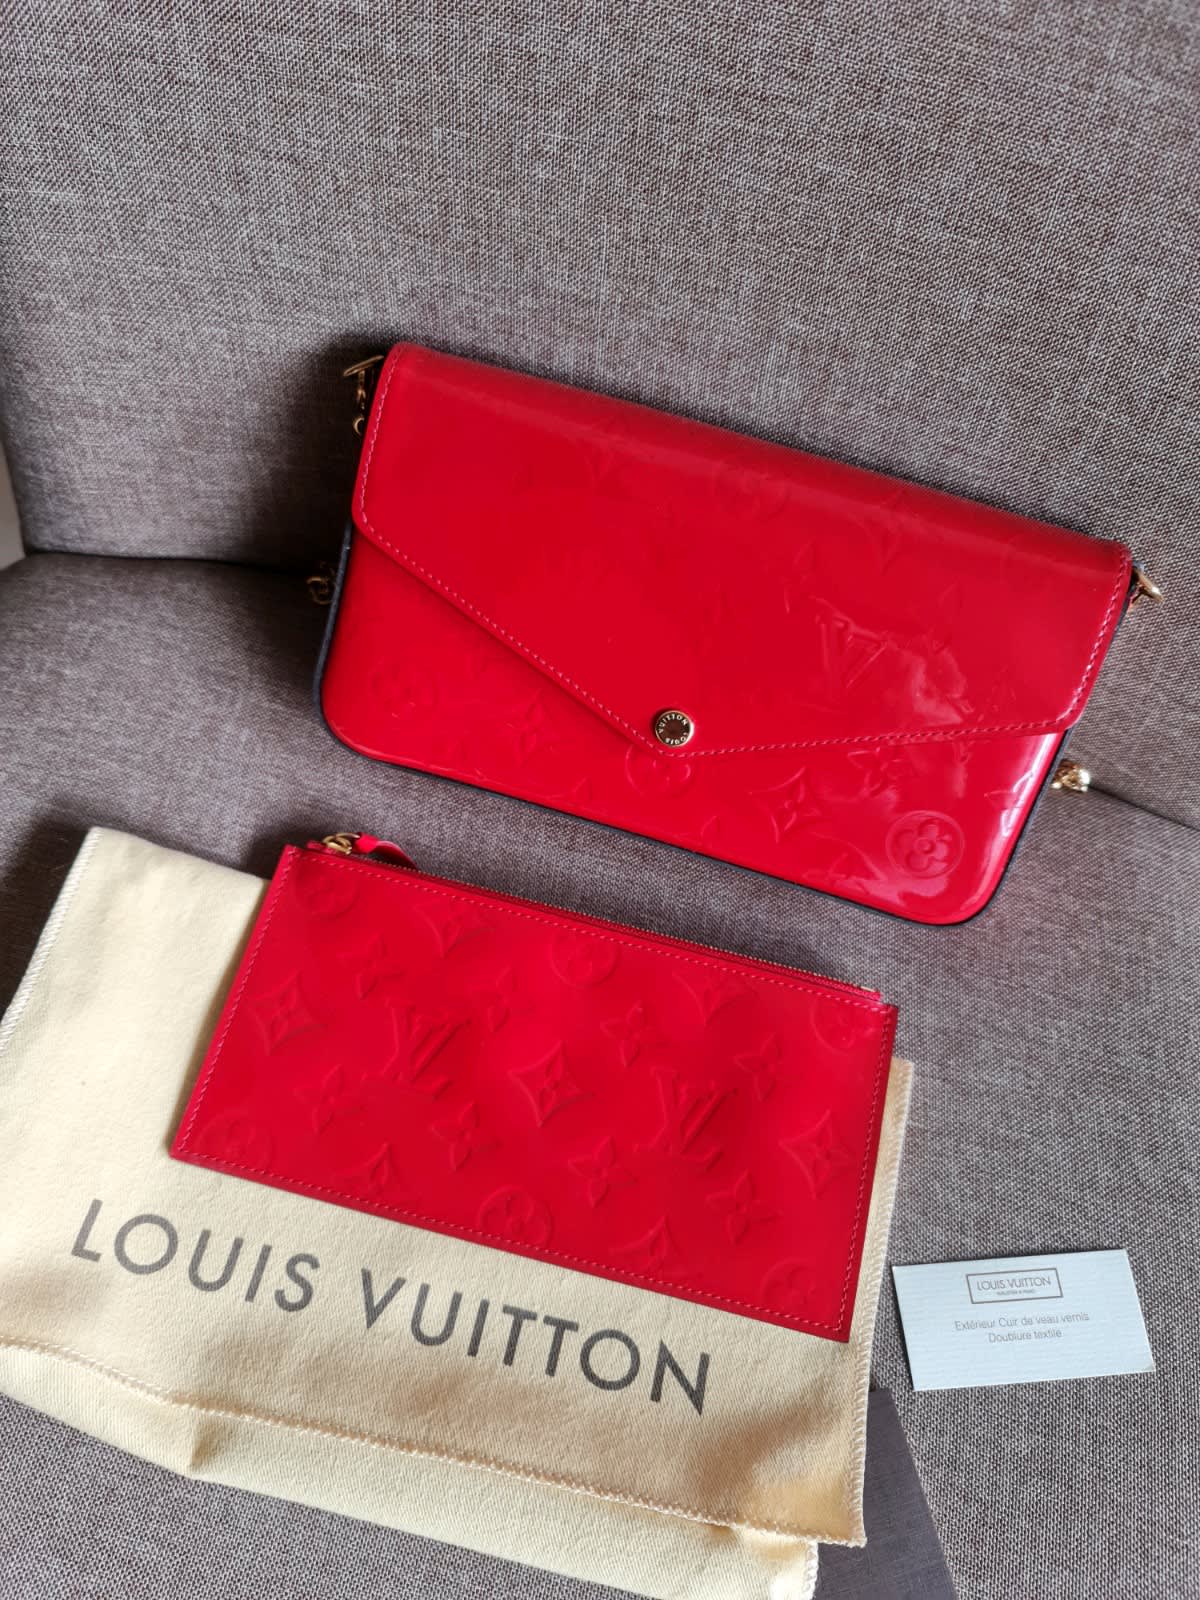 Shop Louis Vuitton Horizon 55 (M23203) by design◇base